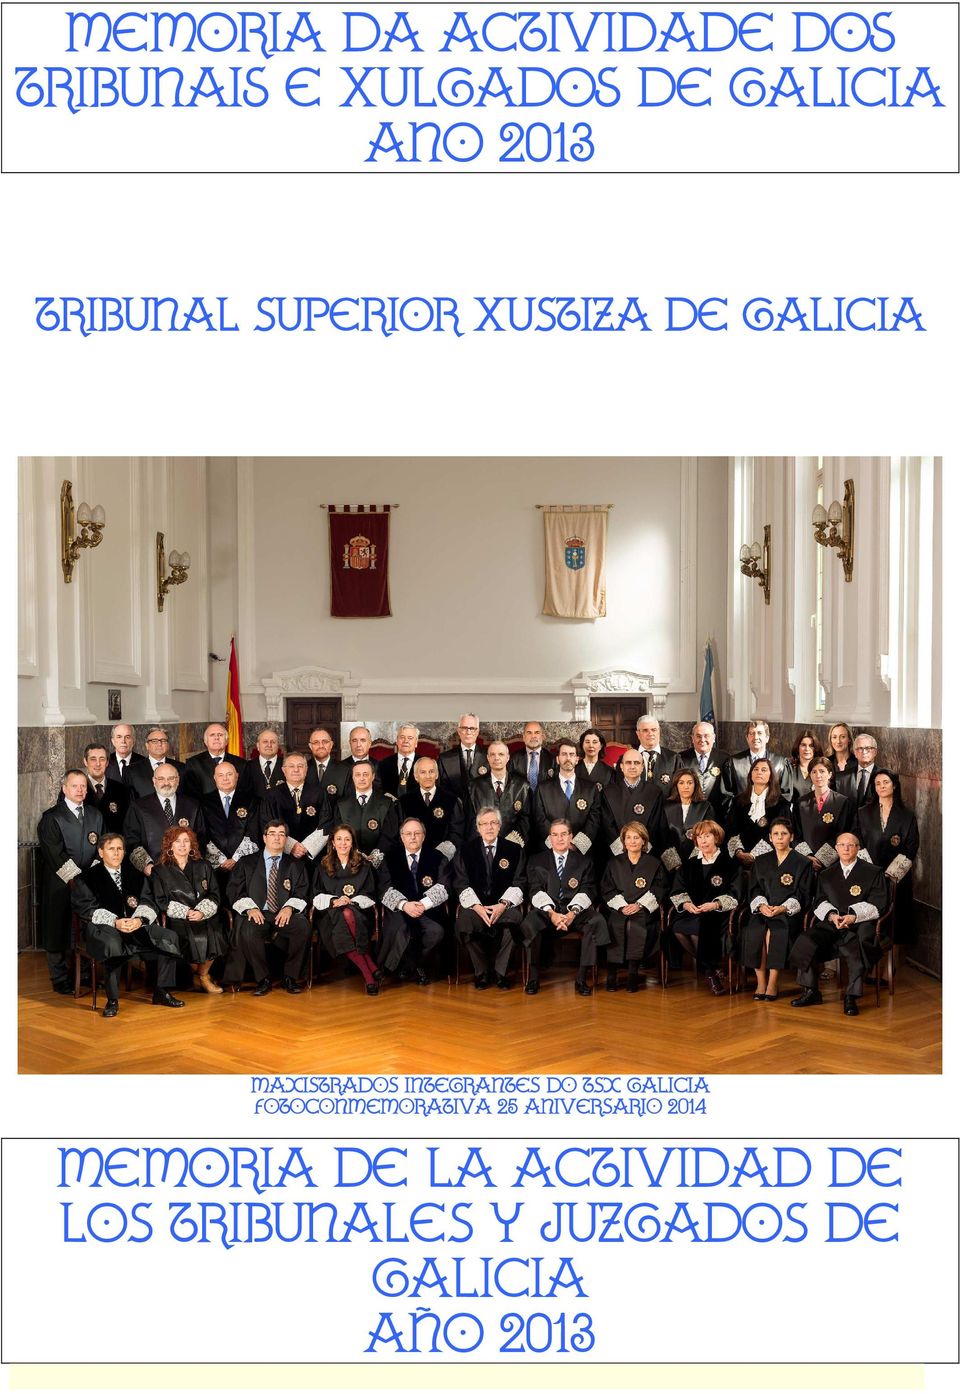 integrantes do tsx galicia Fotoconmemorativa 25 aniversario